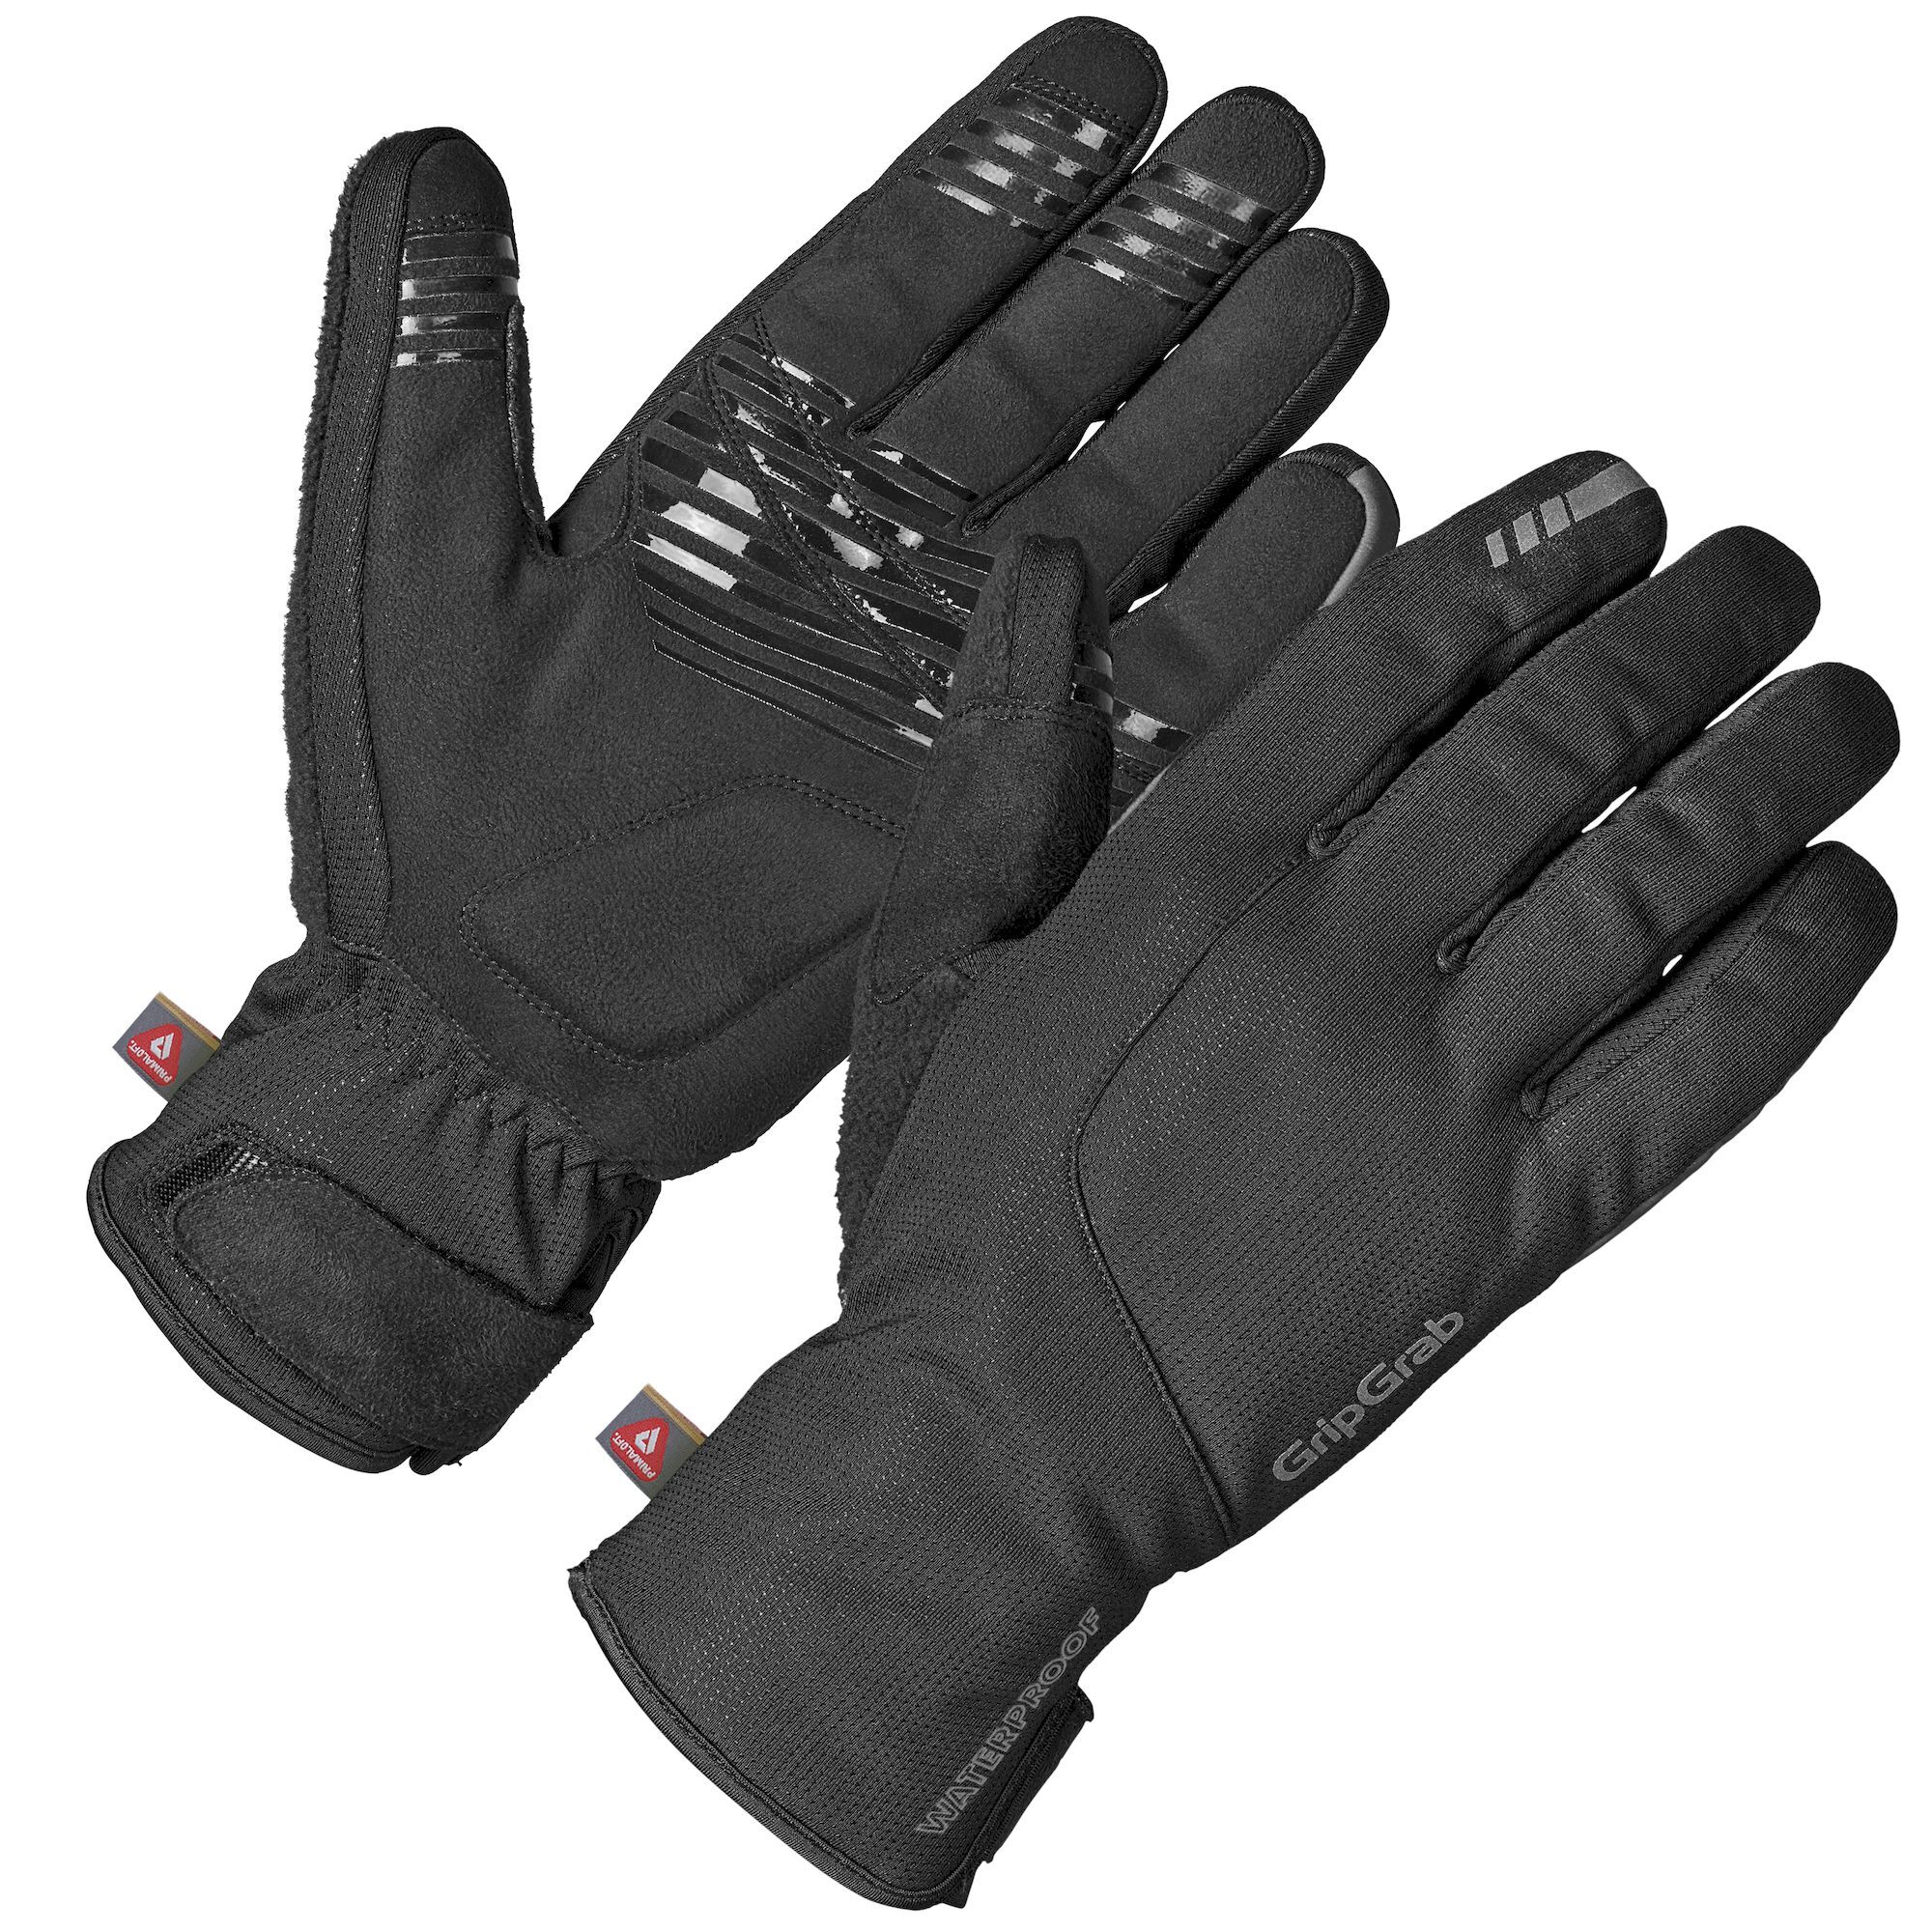 GripGrab Polaris 2 Waterproof Winter Gloves - Guanti ciclismo